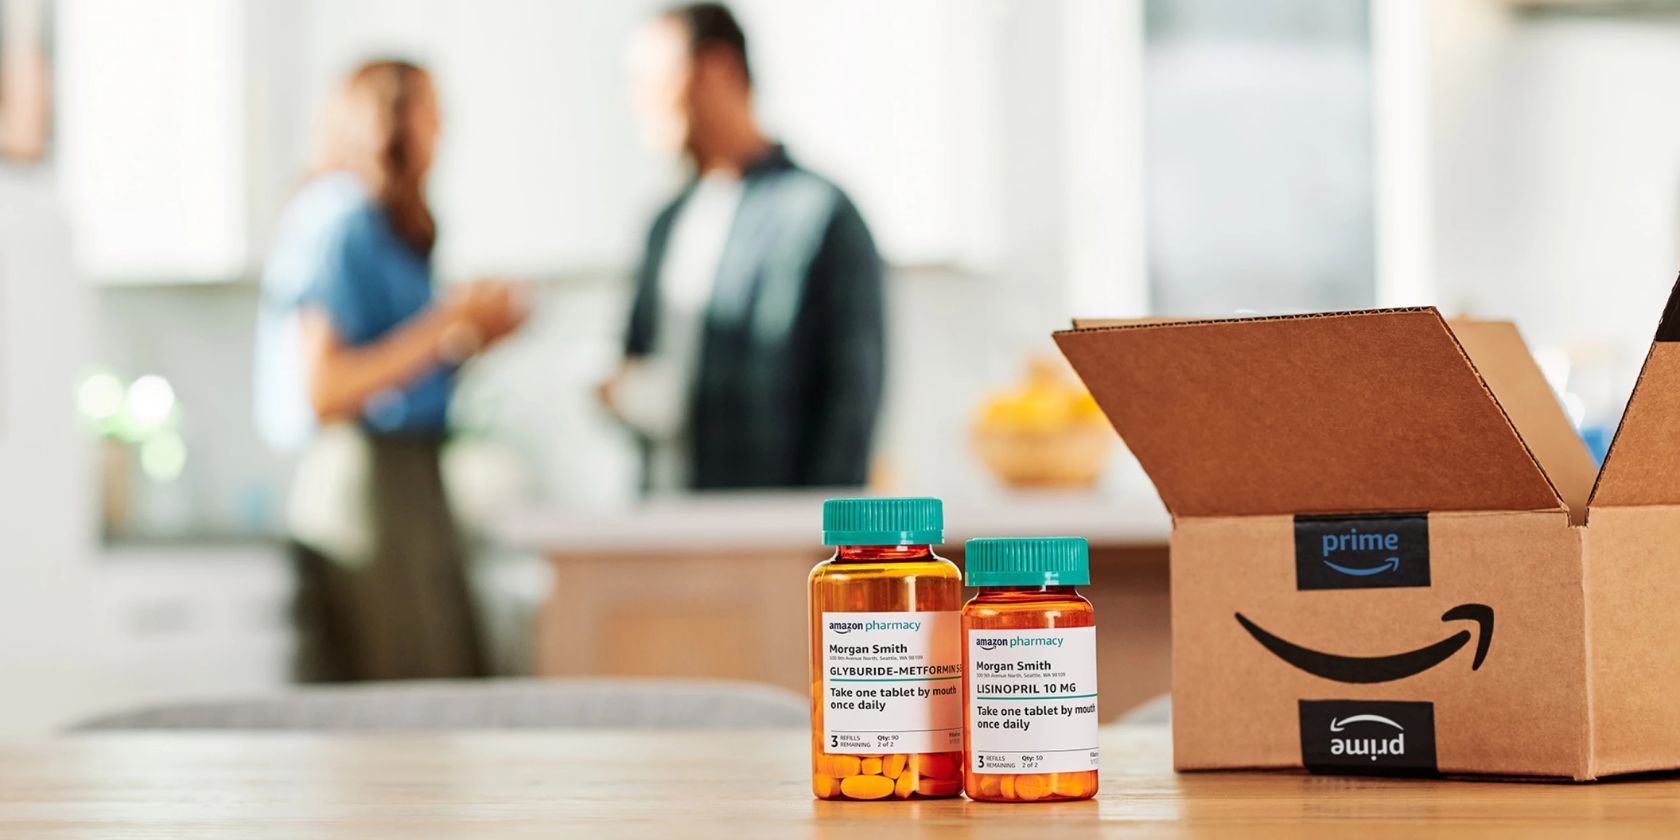 amazon pharmacy prescribed medications next to box